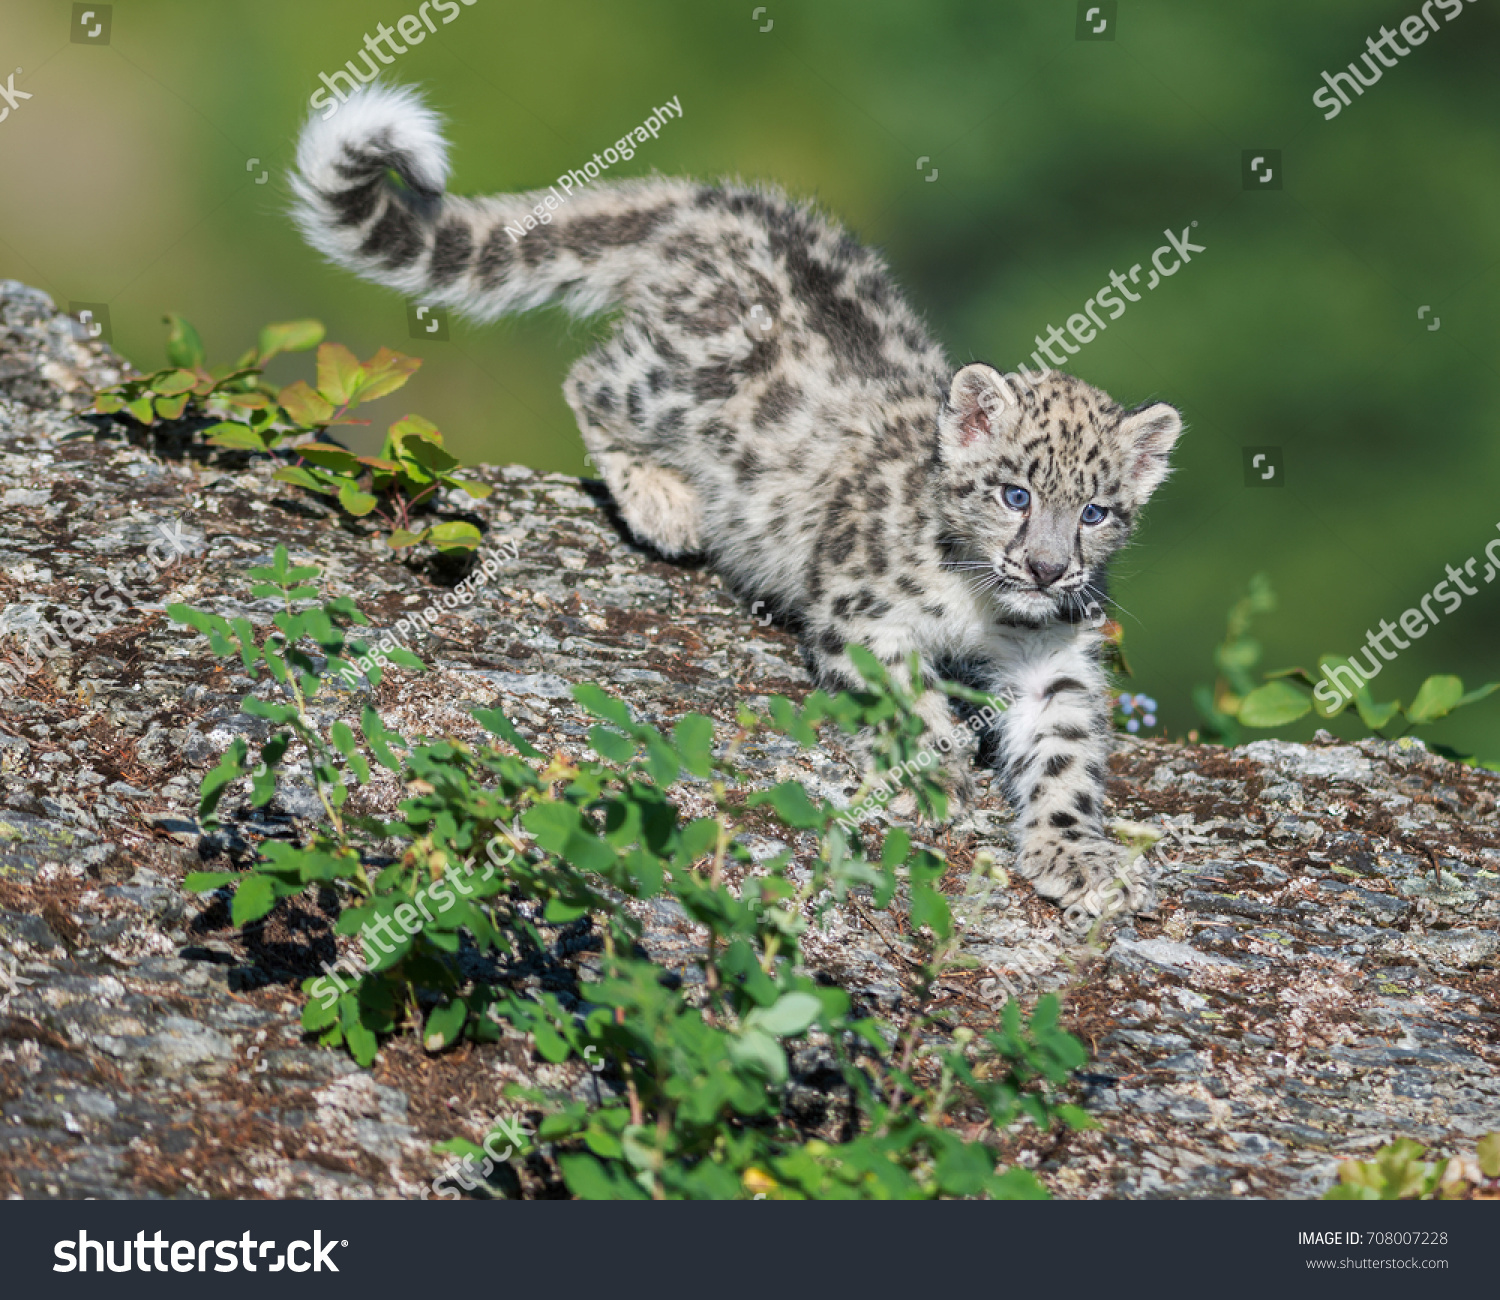 Cute snow leopard cub descending on rocky surface
 #708007228